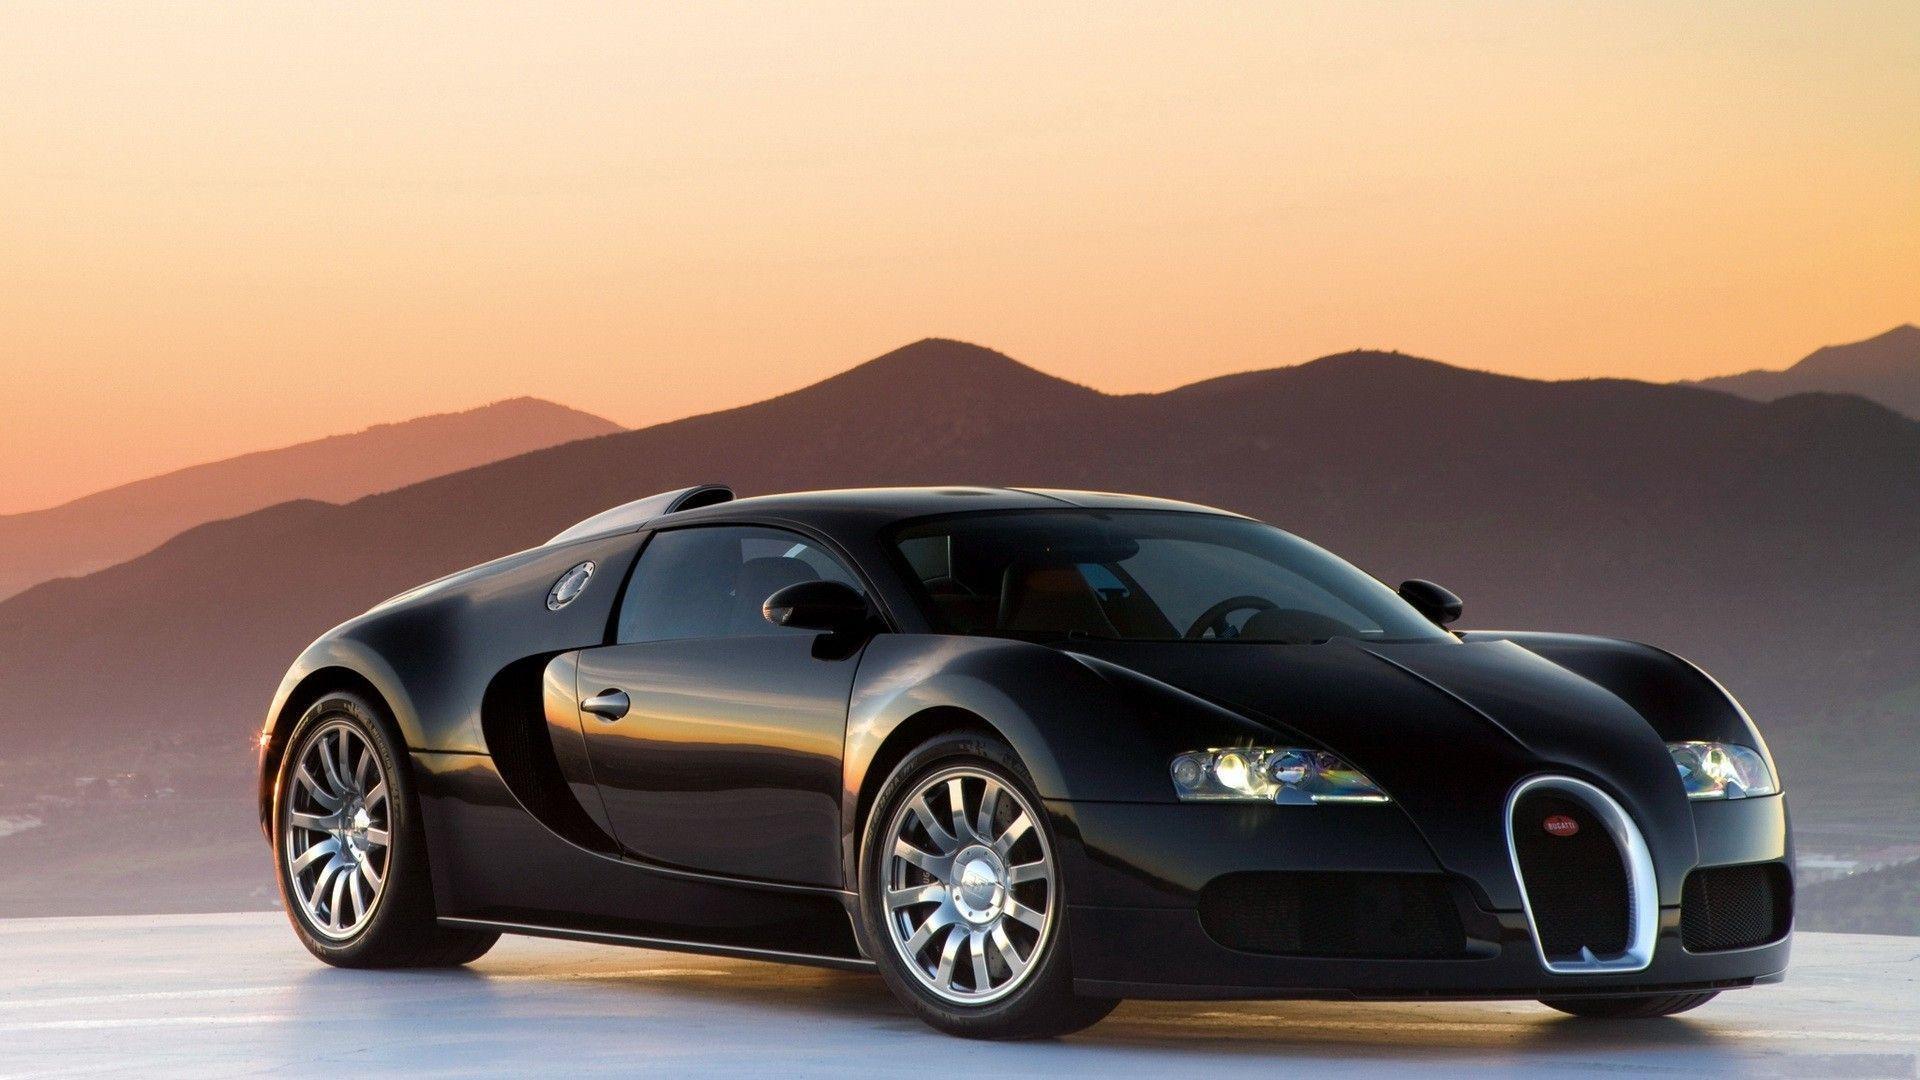 Bugatti Veyron Super Cars 2014 Dekstop Background